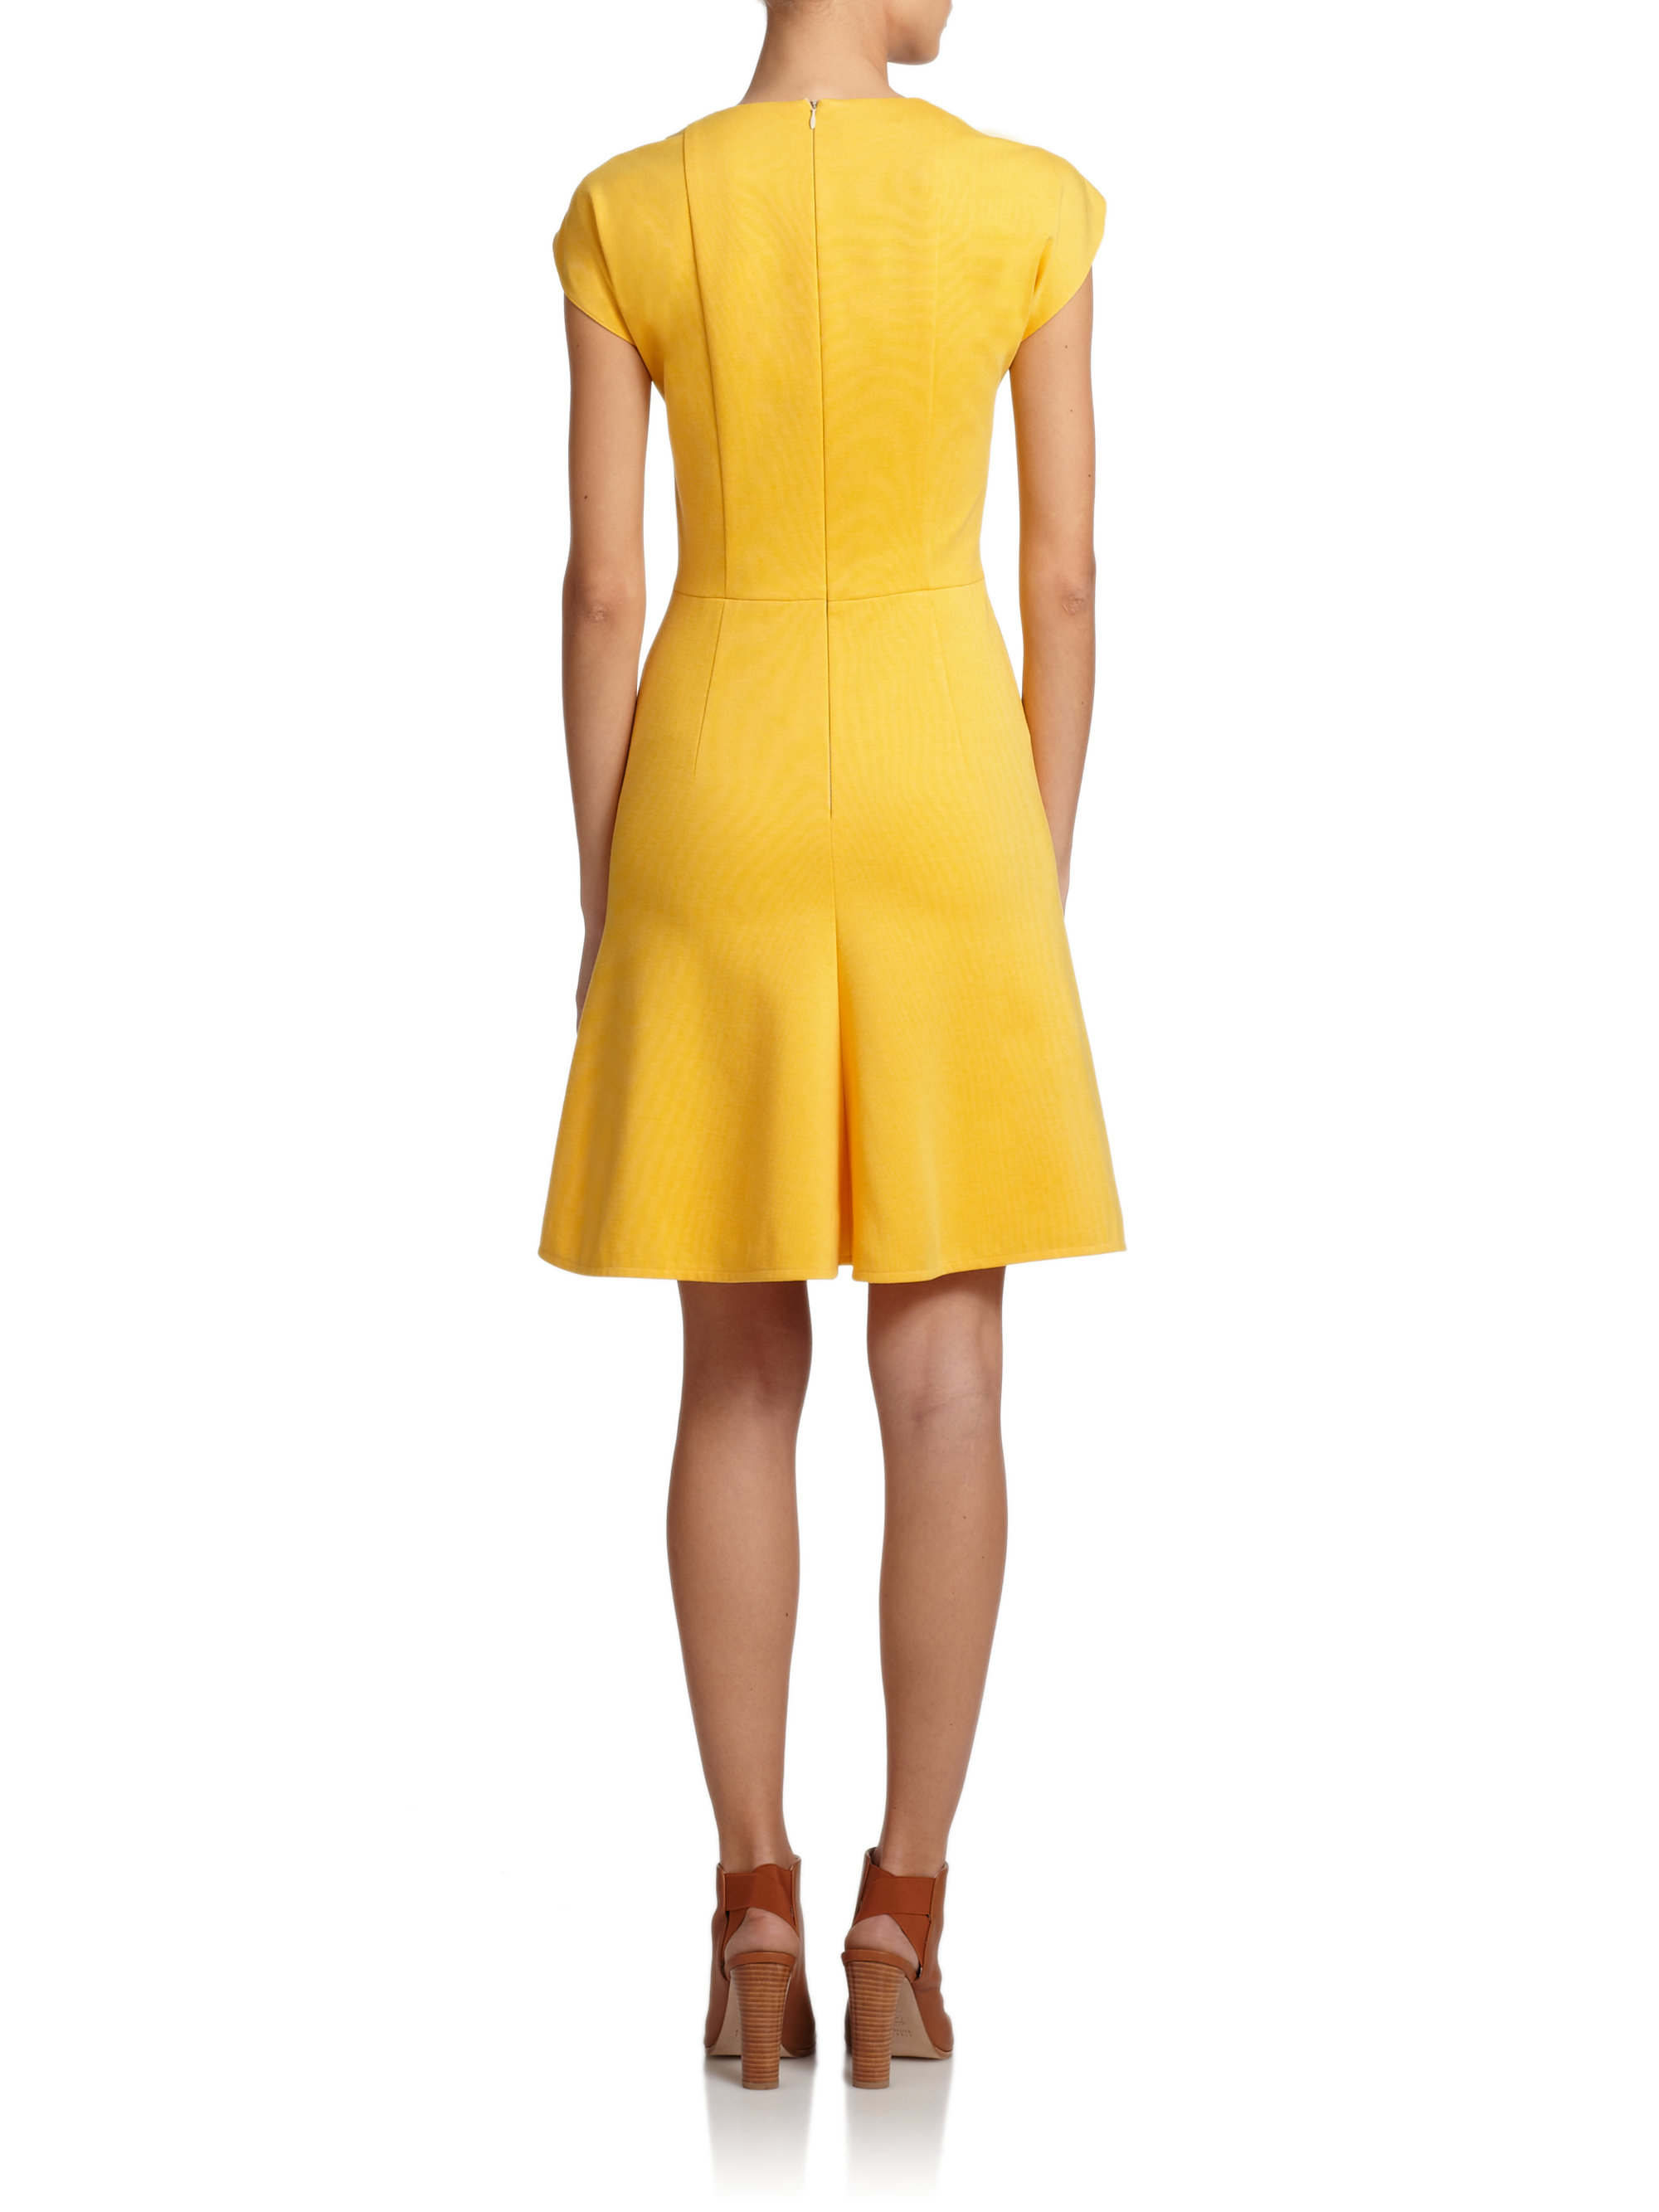 Lyst - Akris Punto Jersey V-neck Dress in Yellow